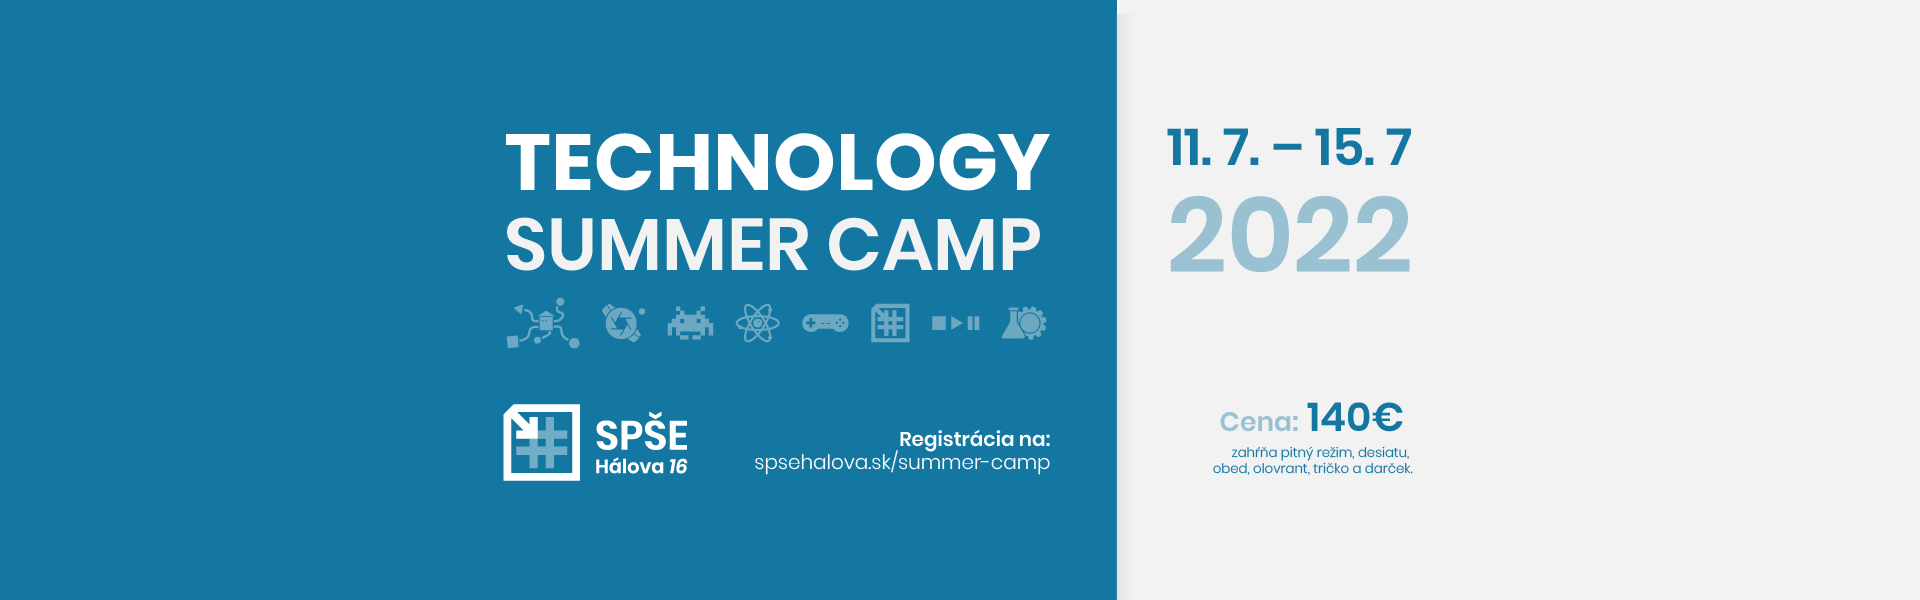 Technology Summer Camp baner